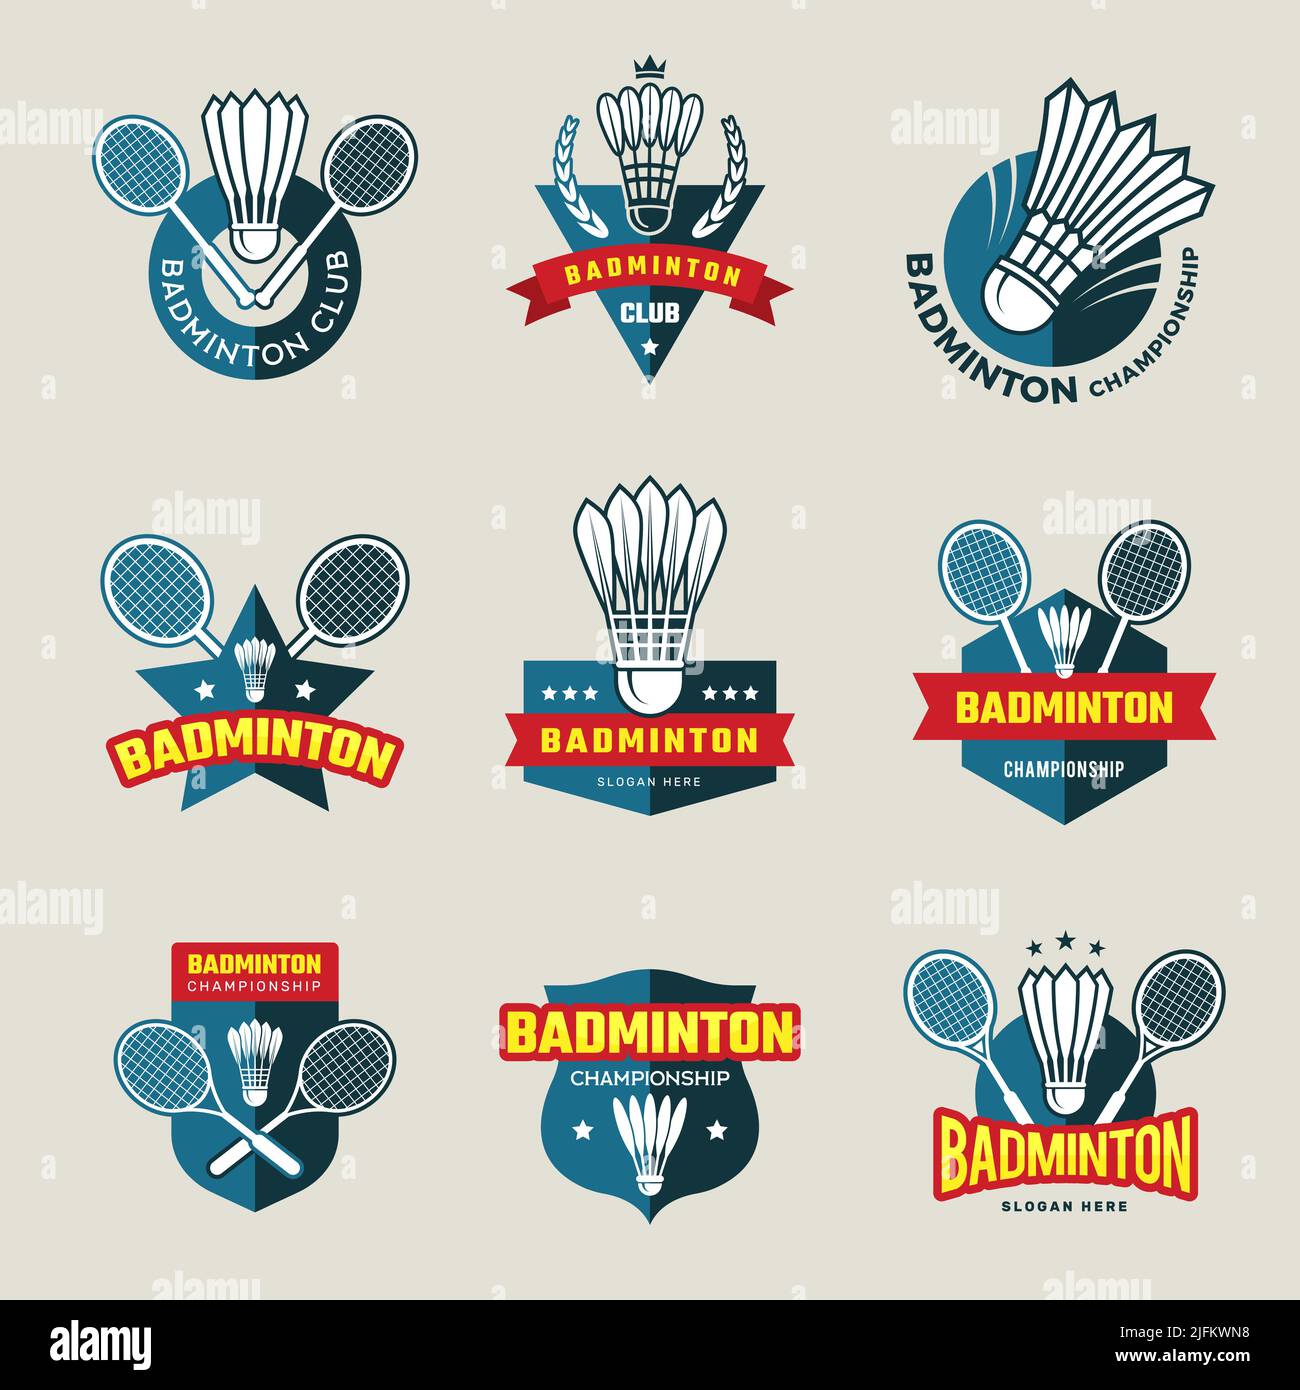 Badminton logo. Sport tennis or badminton championship identity recent vector tournament competition badges templates Stock Vector